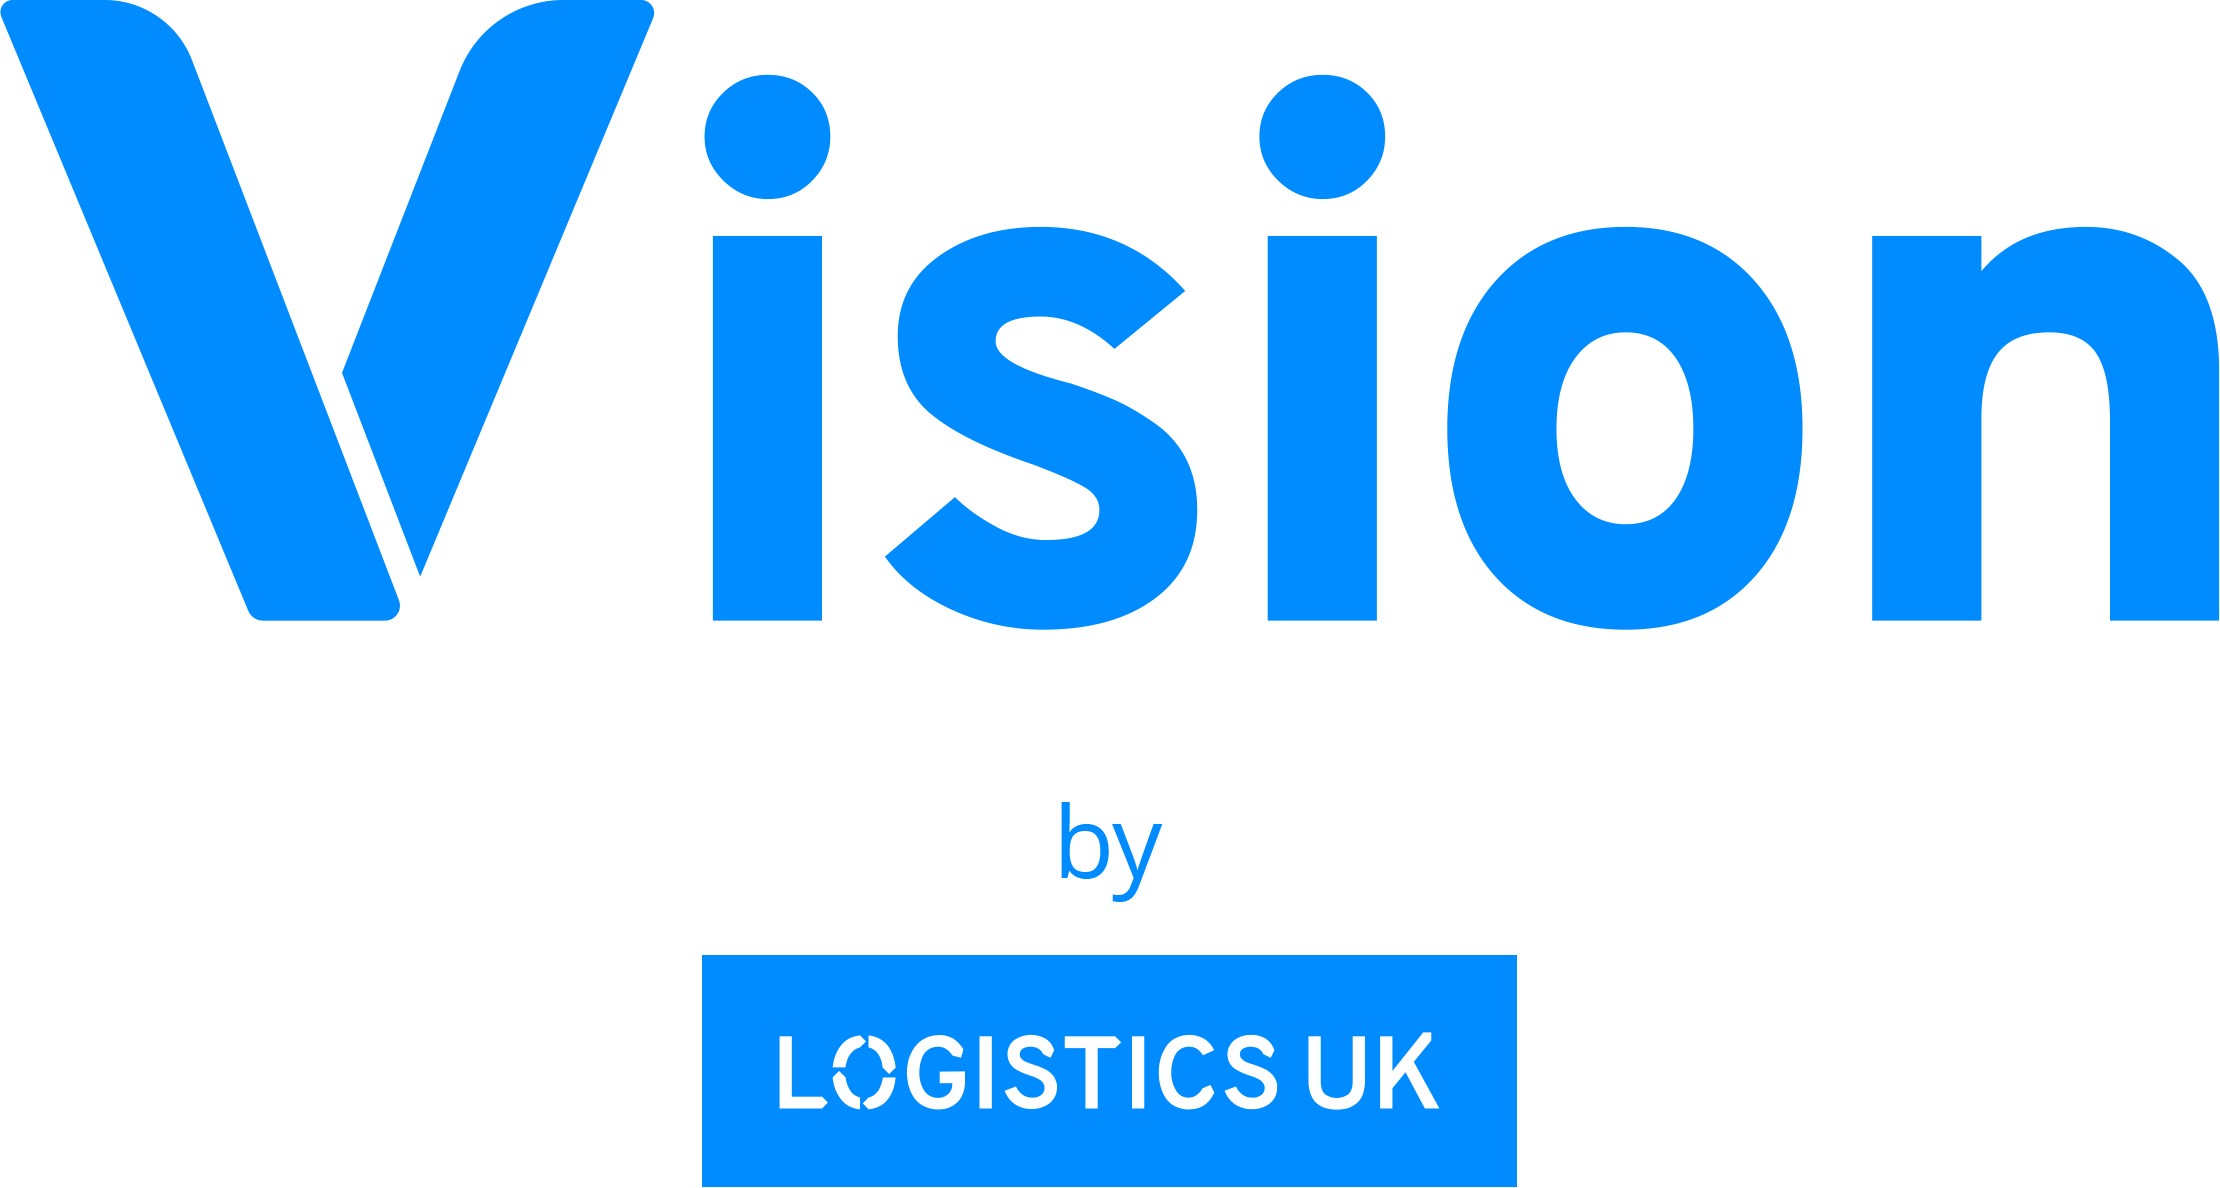 world vision Logo PNG Vector (EPS) Free Download